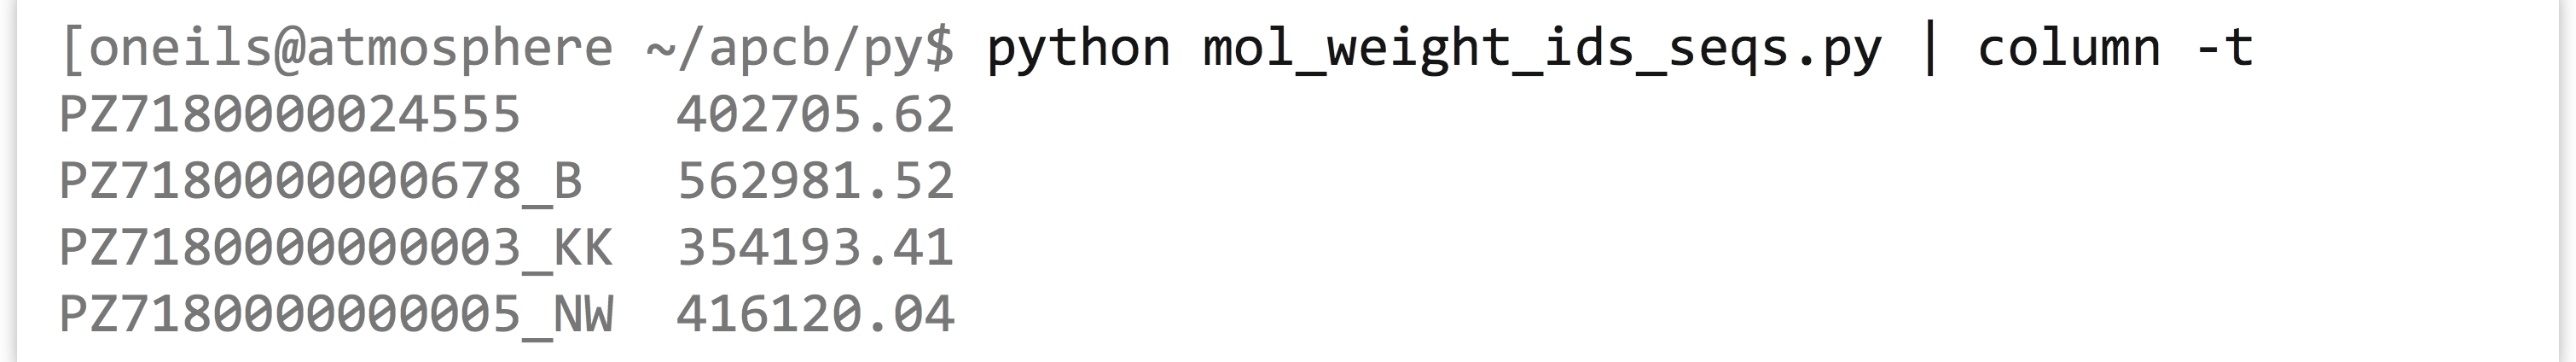 II.5_13_py_50_mol_weight3_output